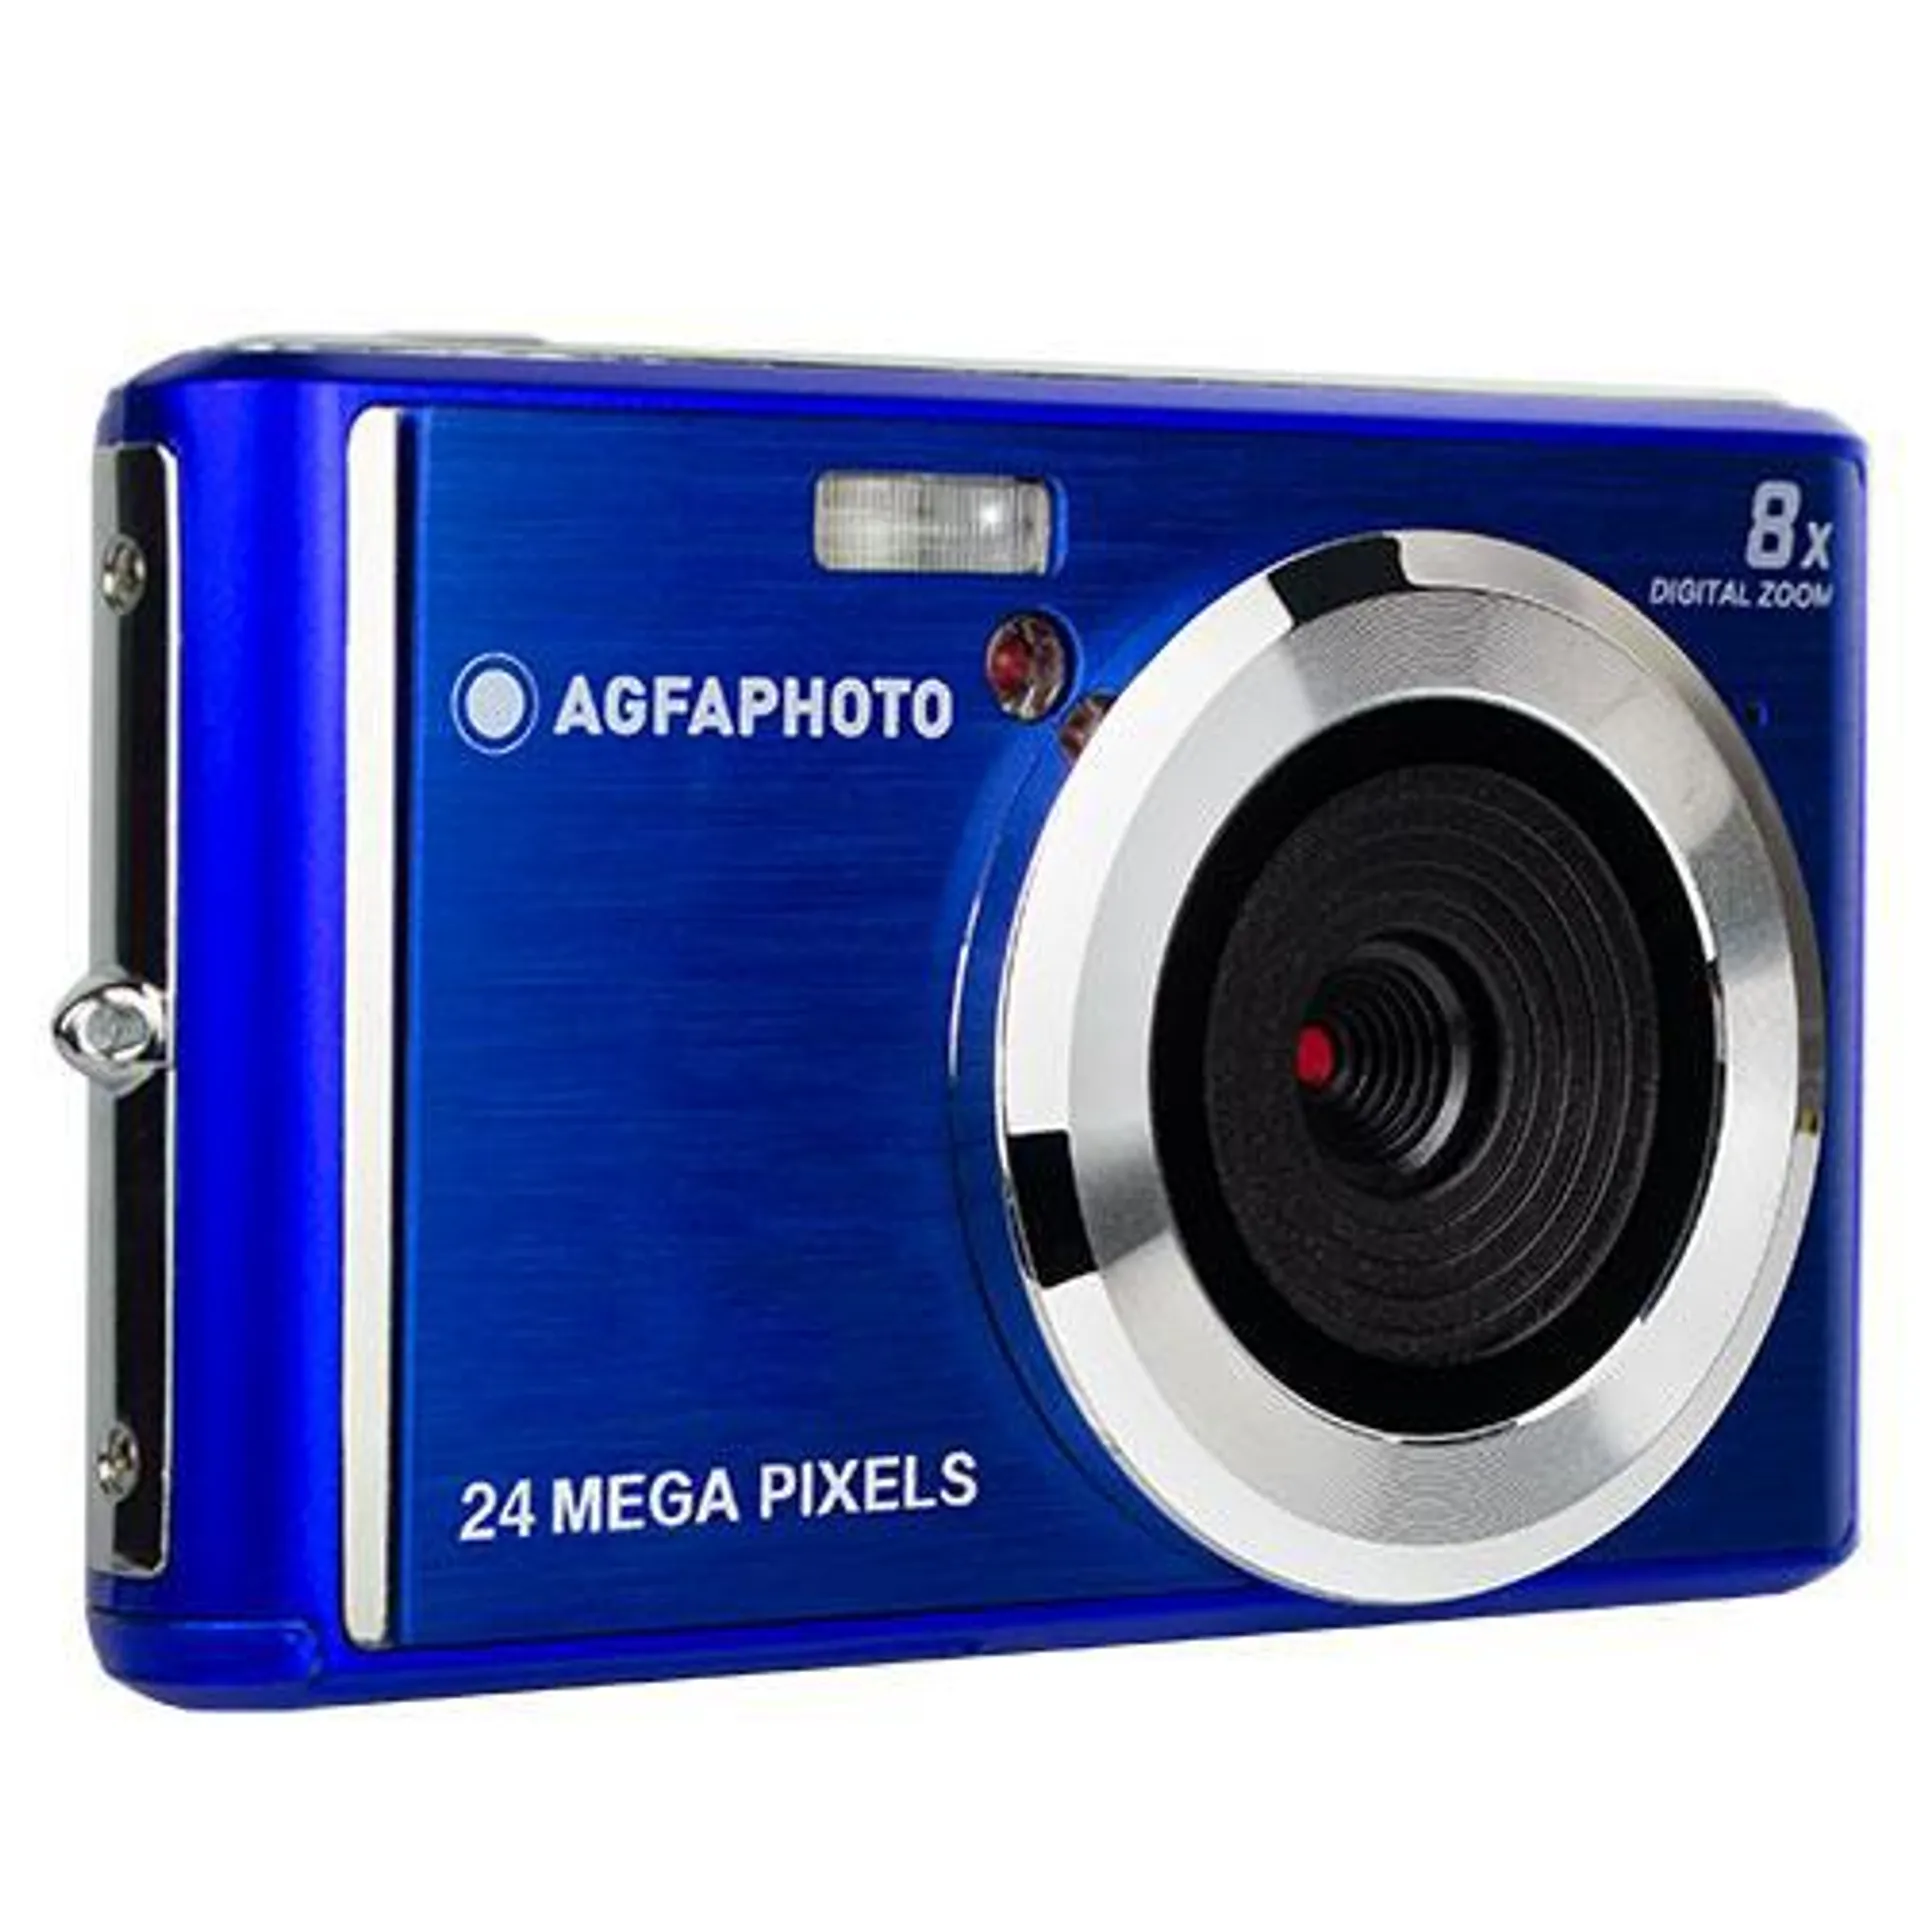 Agfaphoto Realishot DC5200 Digital Camera in Blue